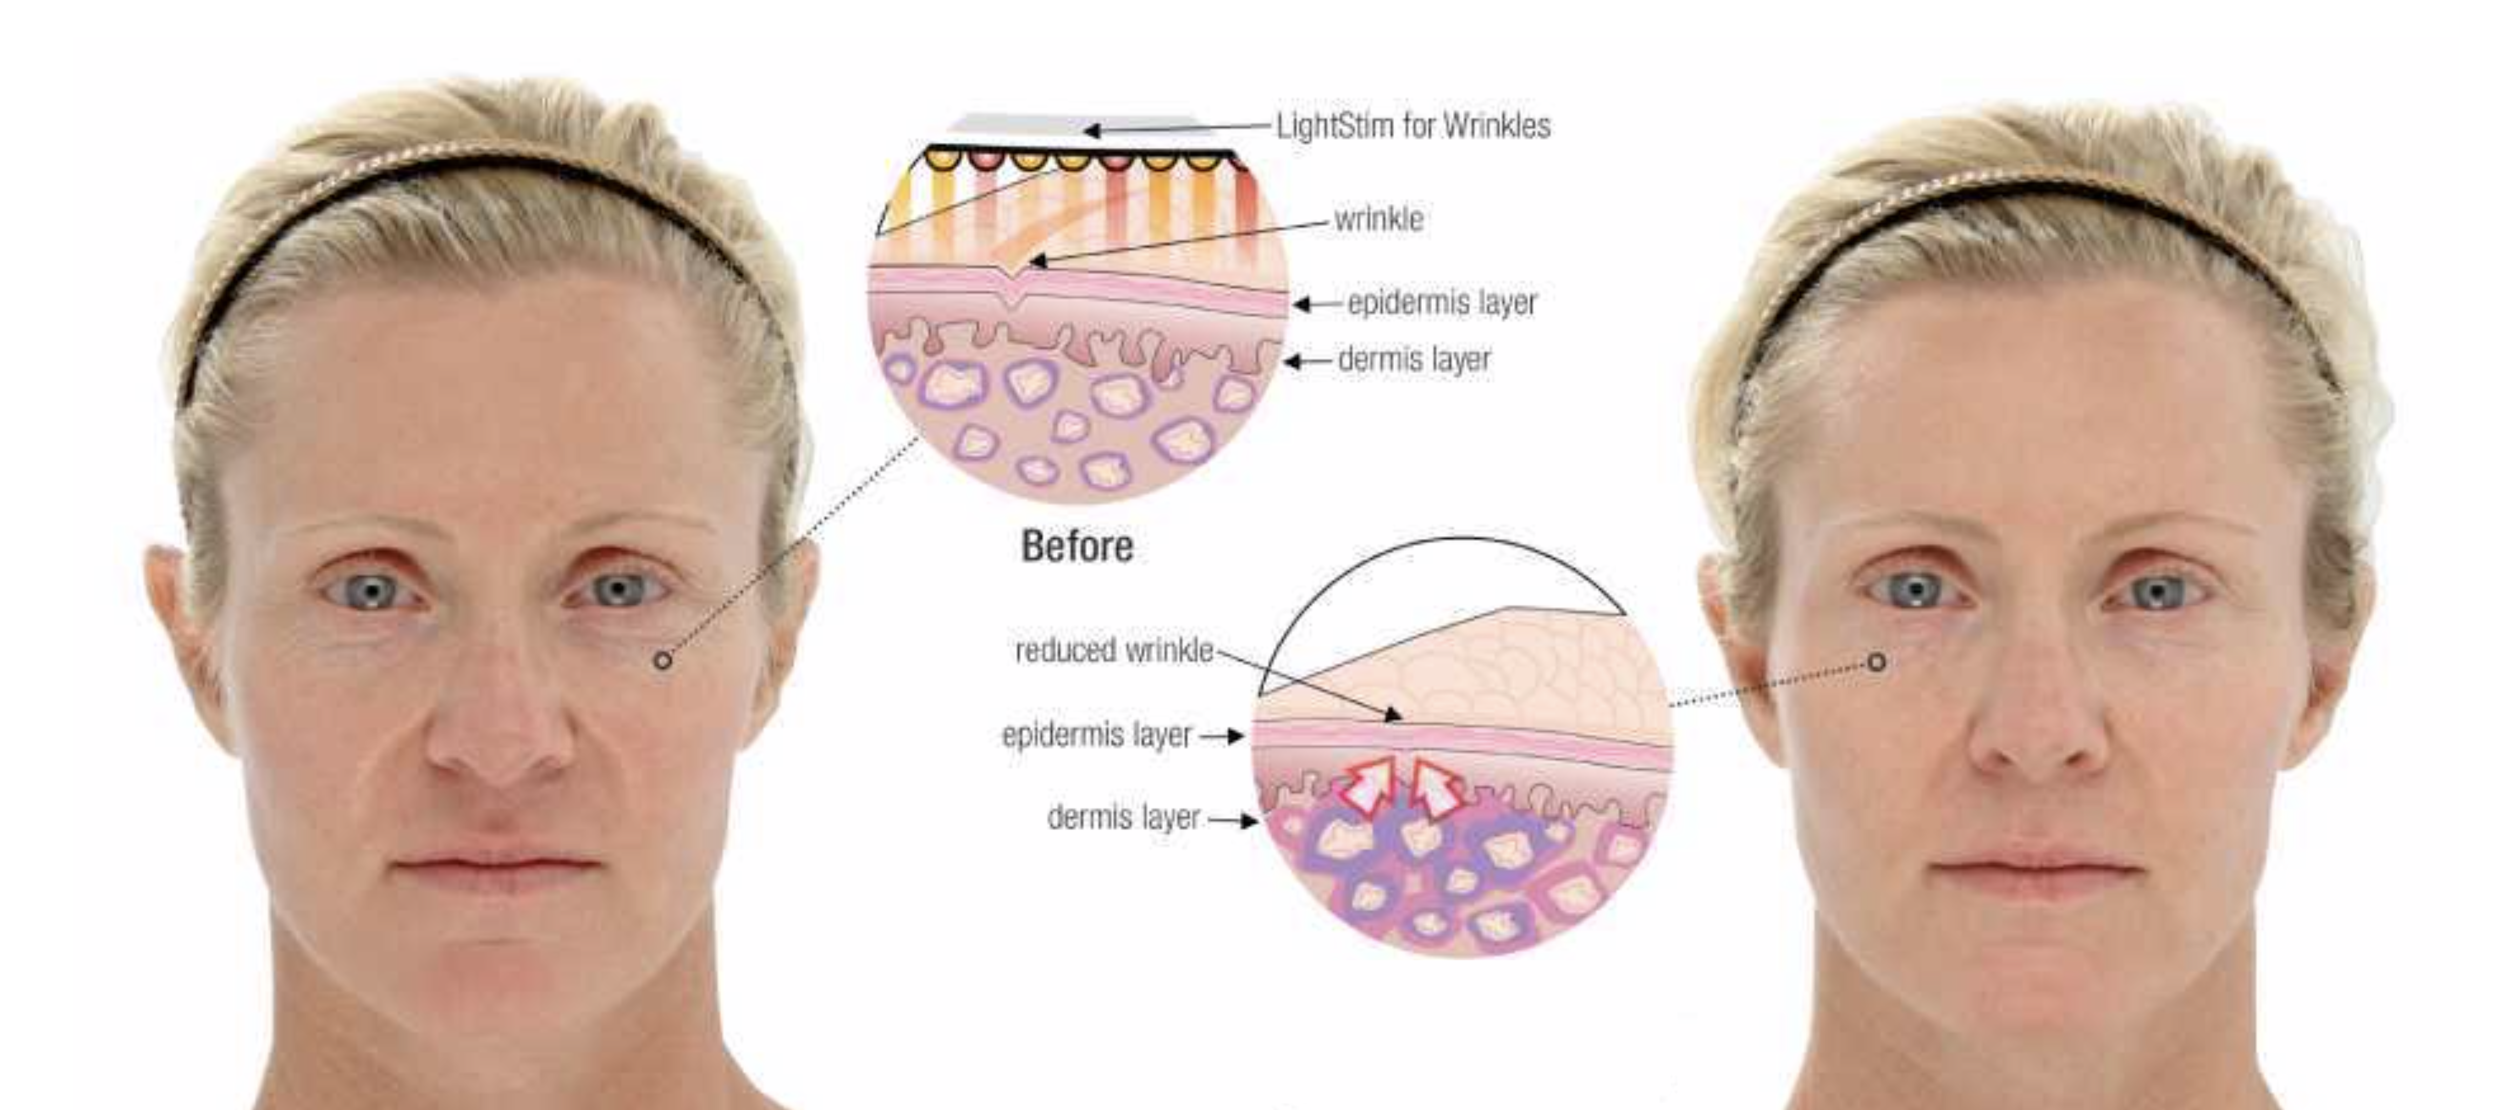 LED LightStim Facial Results RejuvCryo & Wellness.png